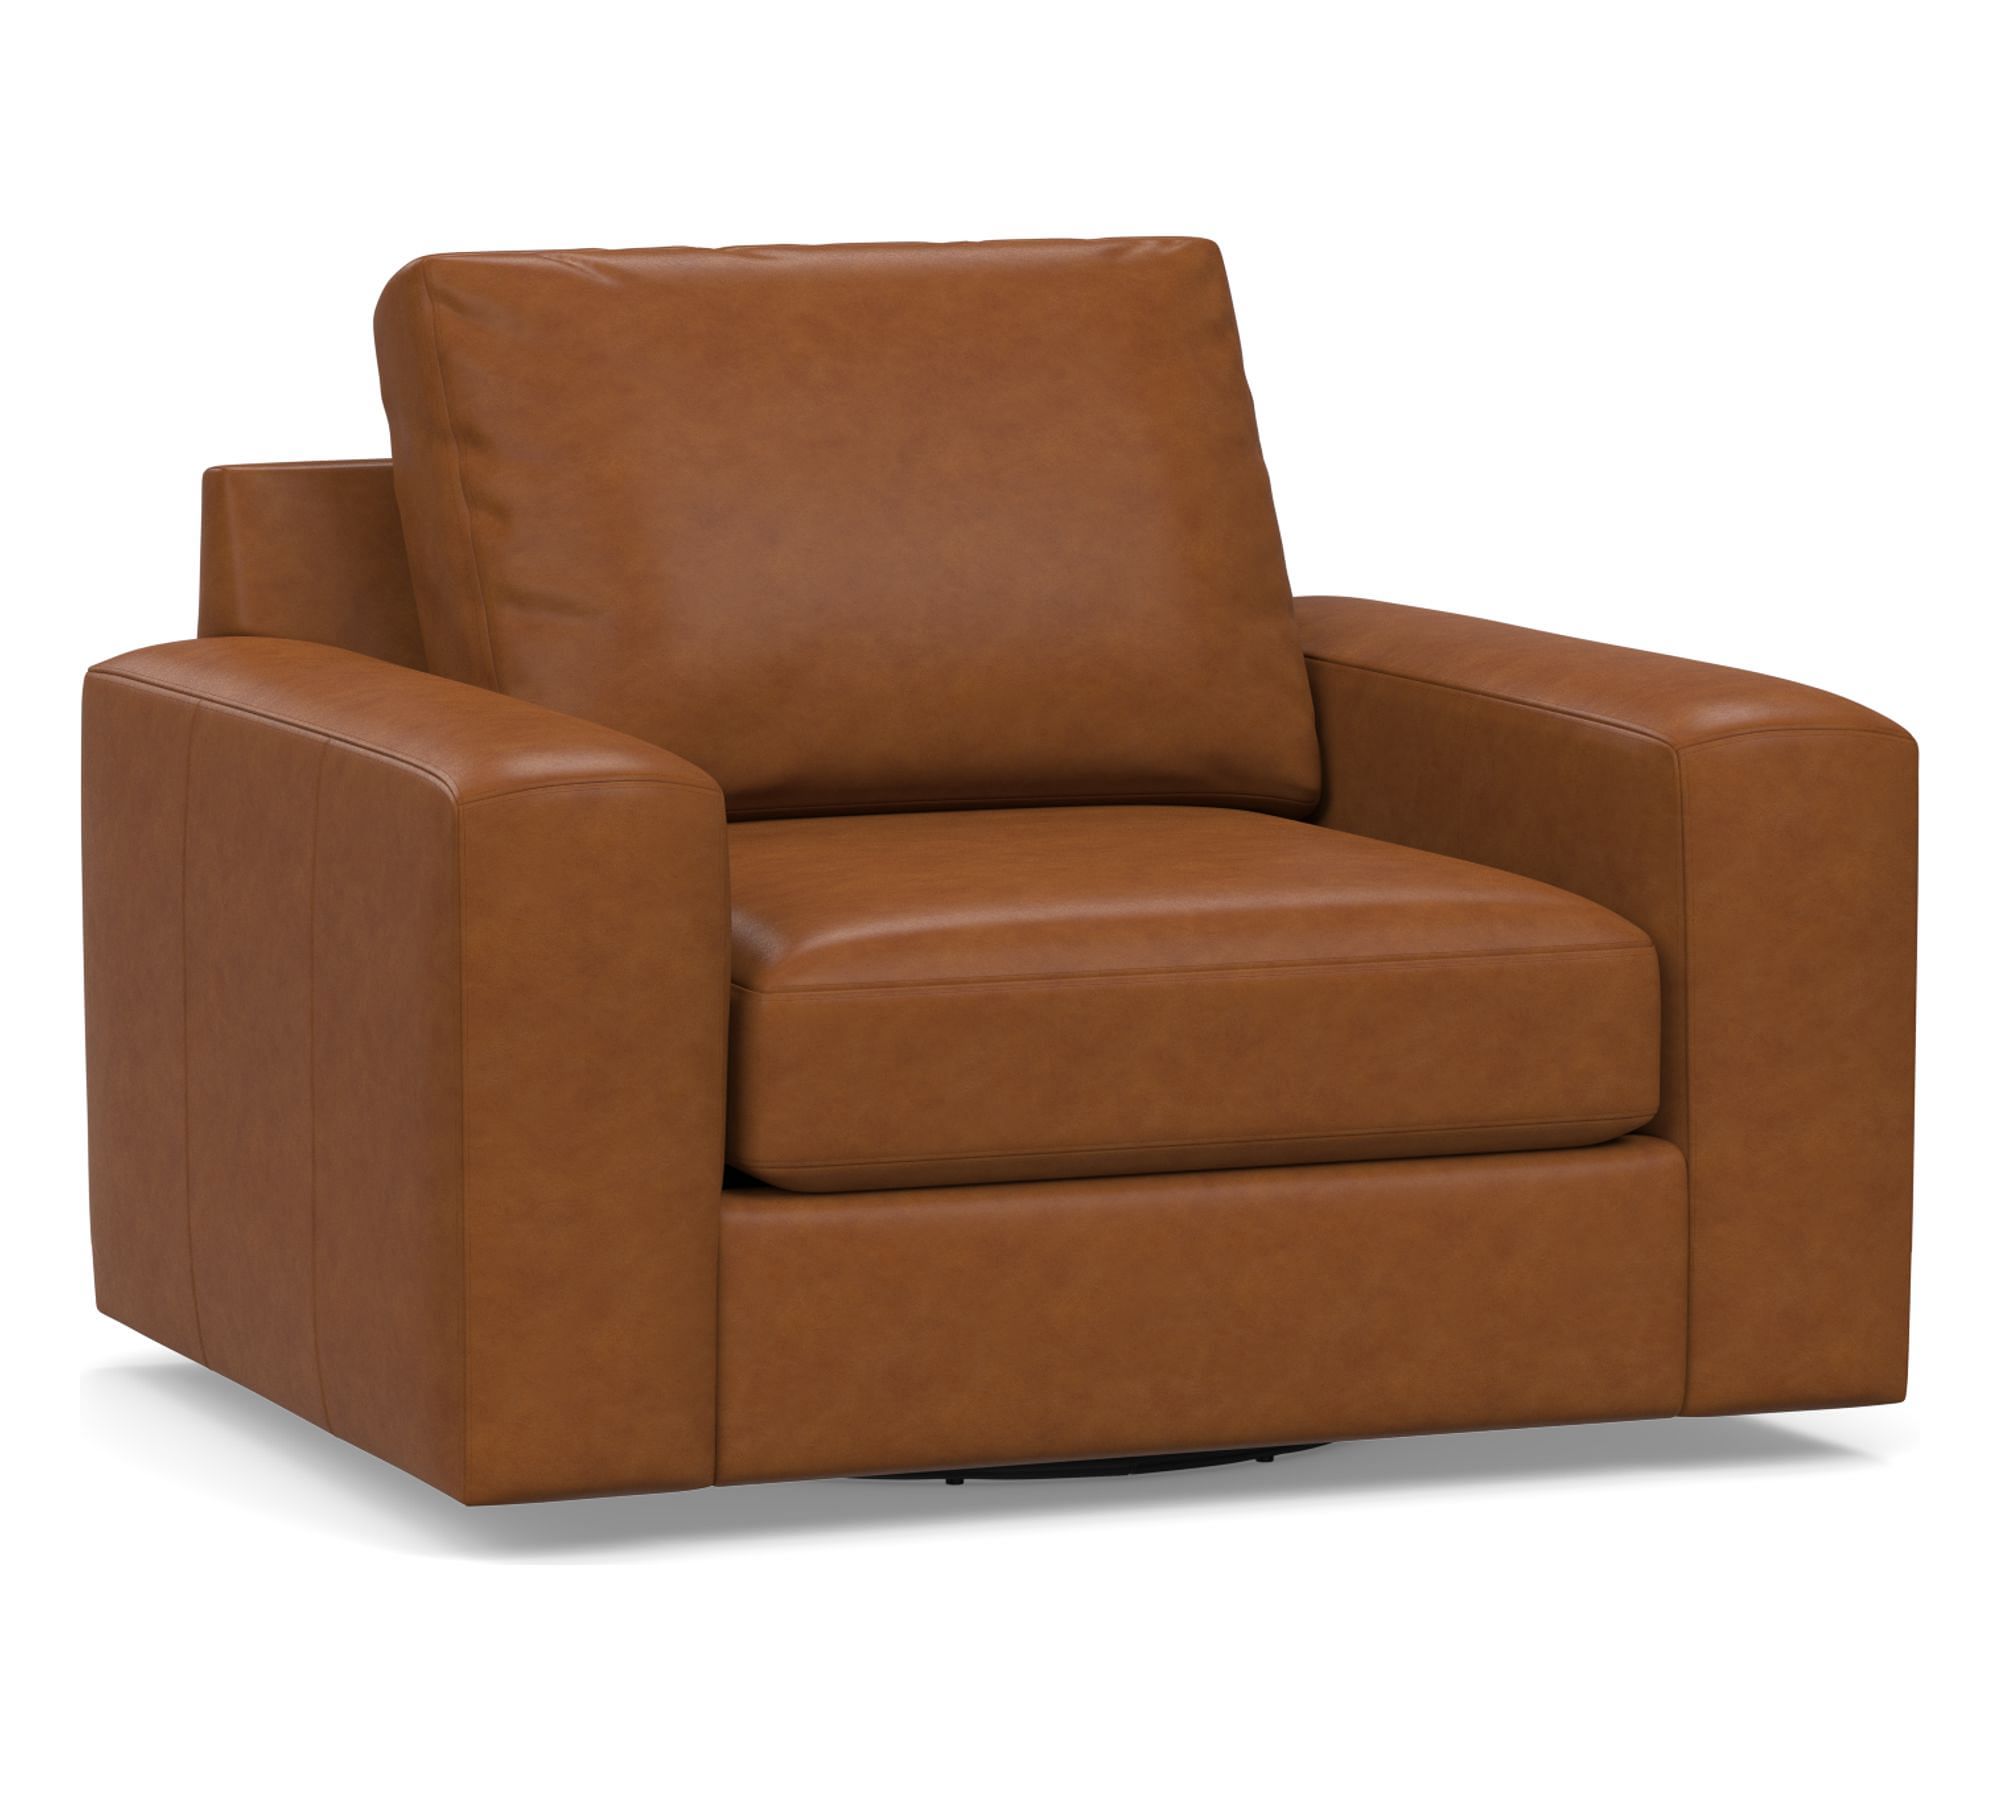 Big Sur Square Arm Leather Swivel Chair